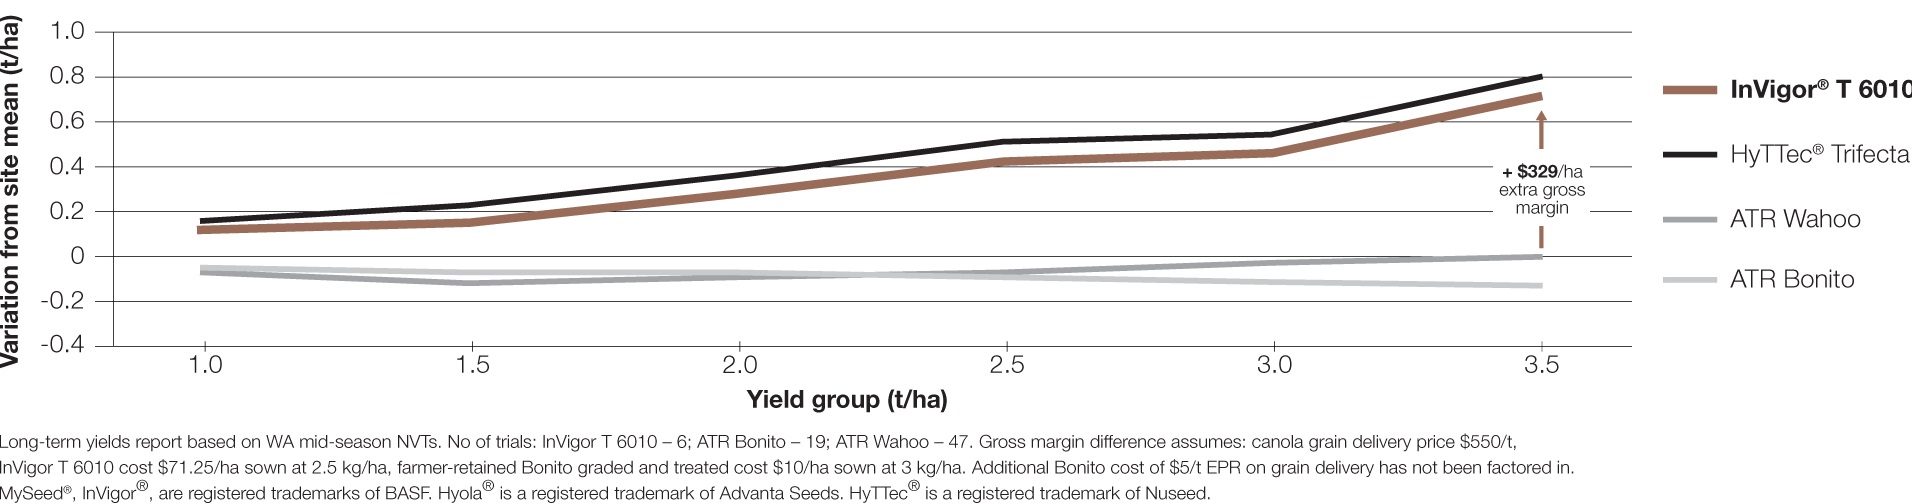 T6010 A-growing-advantage-as-yields-climb